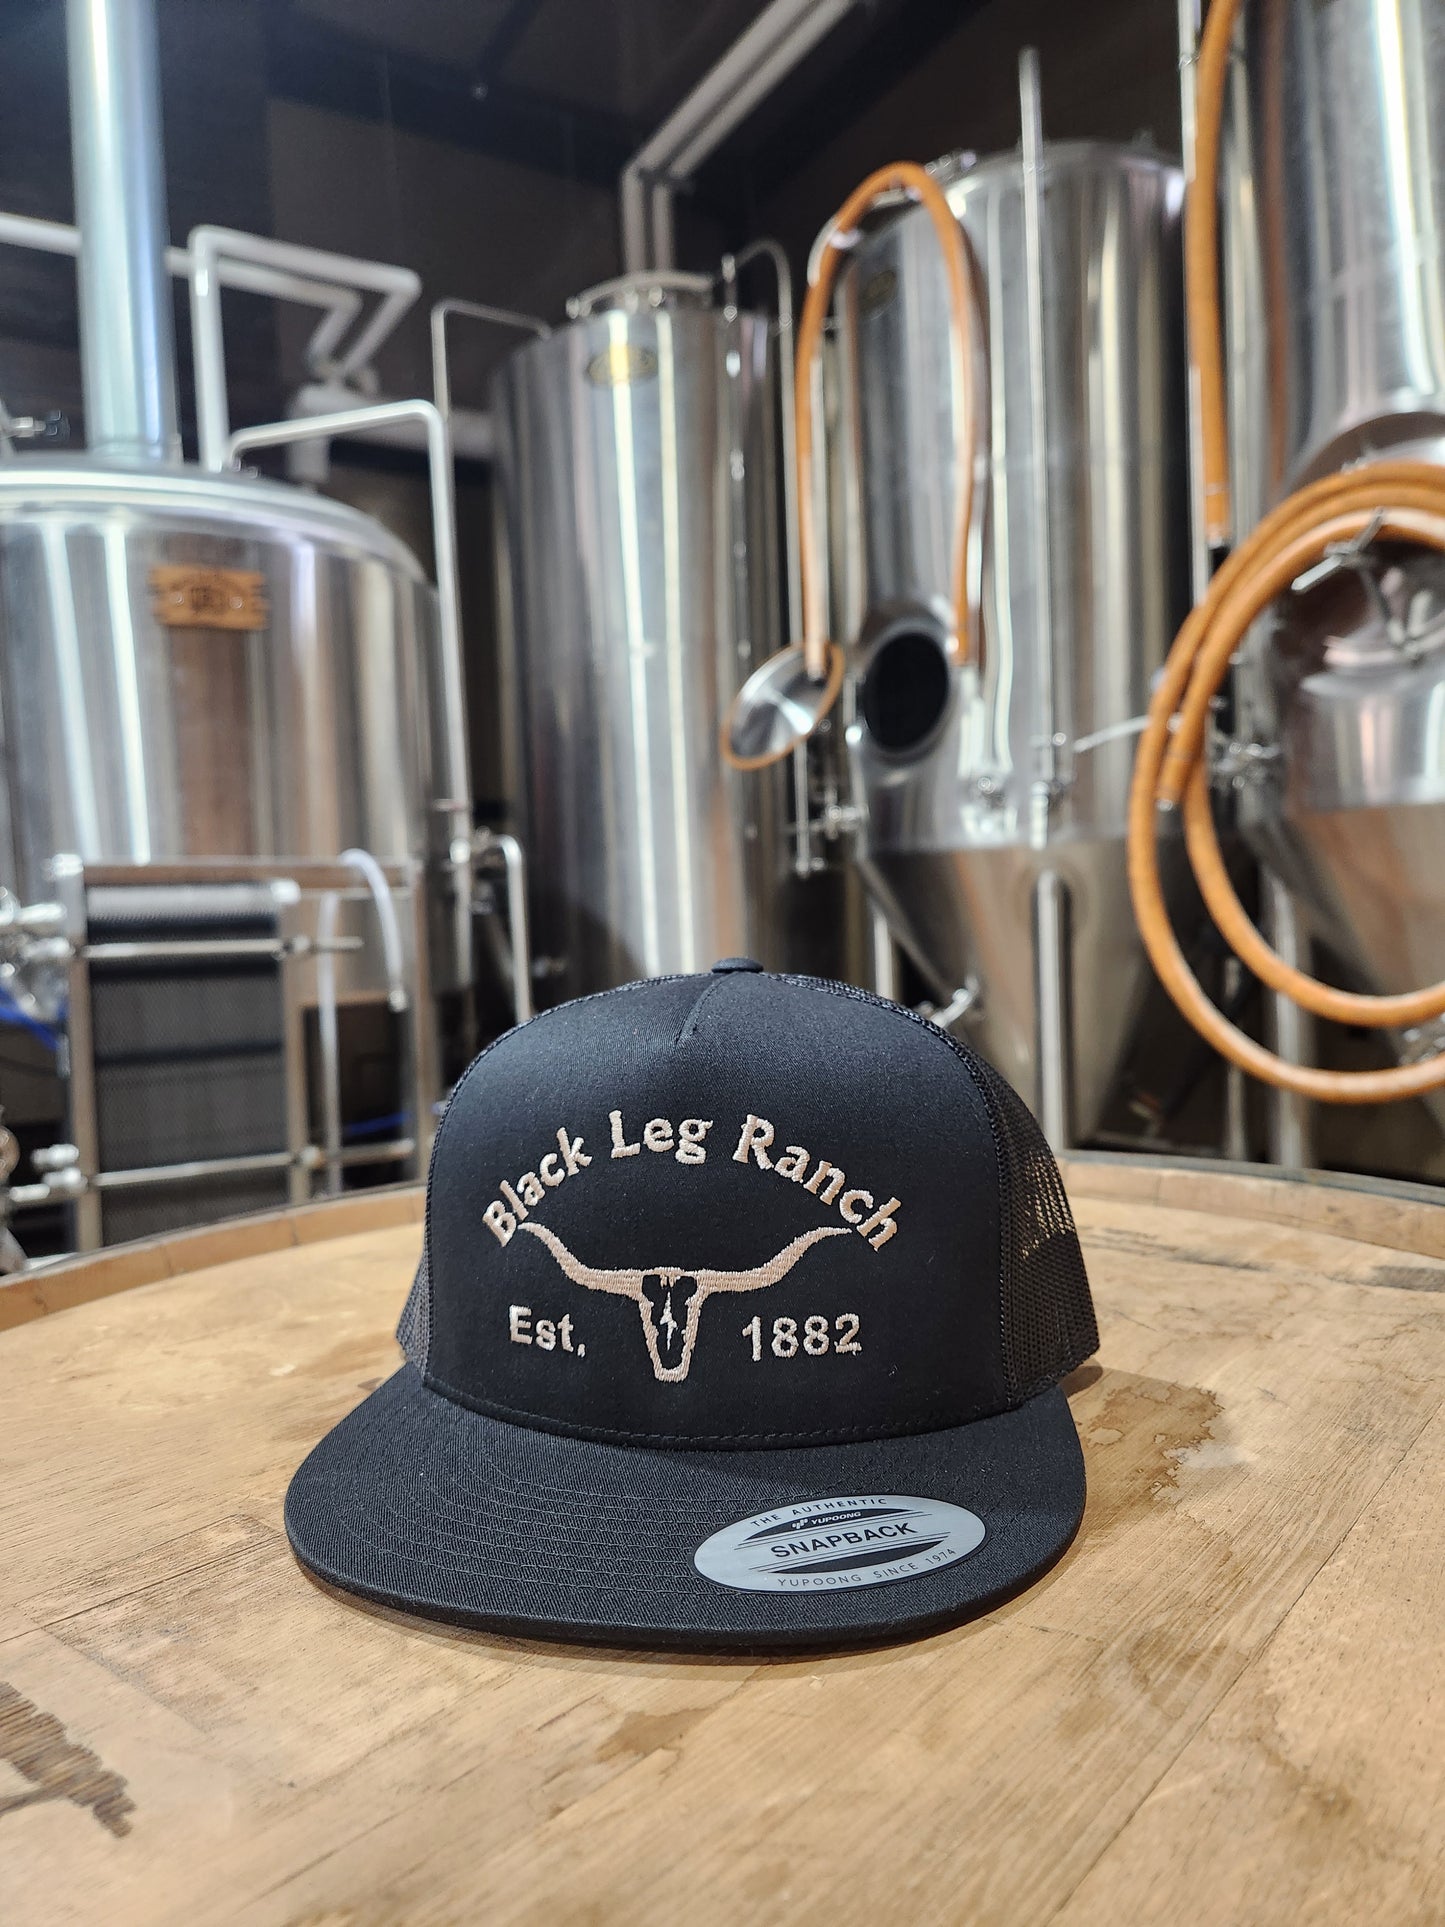 Black Leg Ranch Longhorn Hat (FREE SHIPPING)